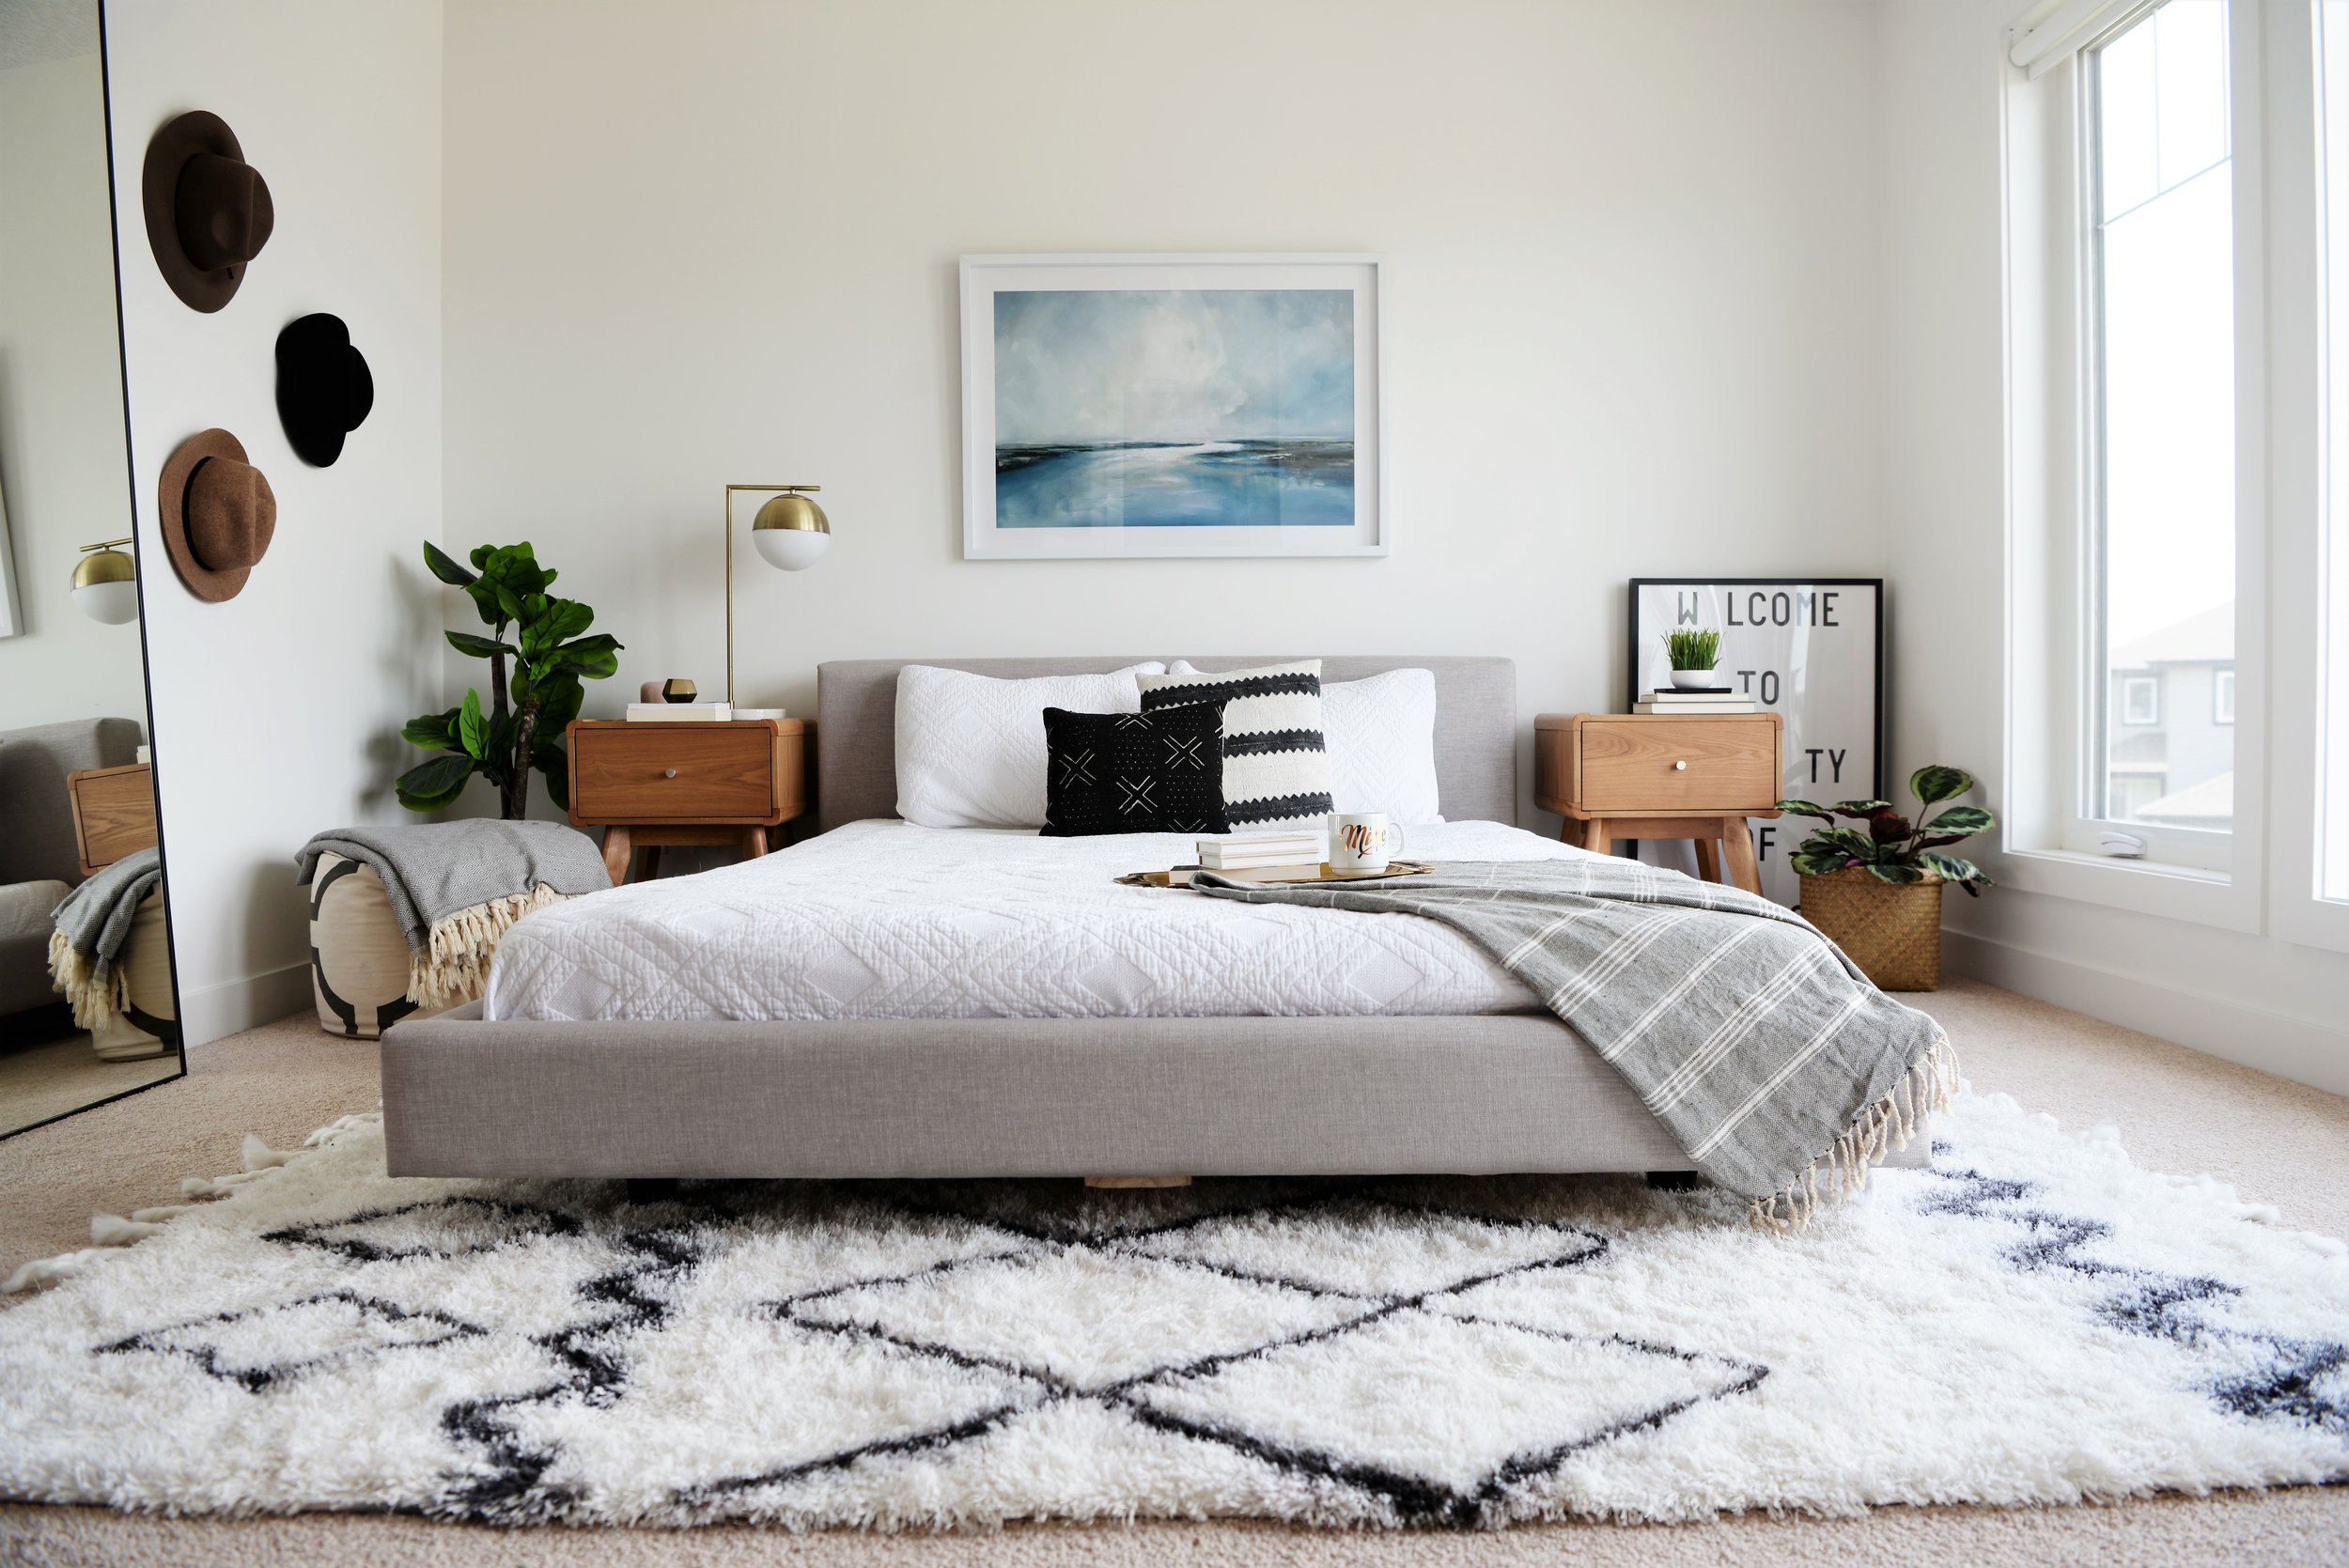 Minimalist Bedroom Decor - Our Bedroom Update + What to Binge on ...